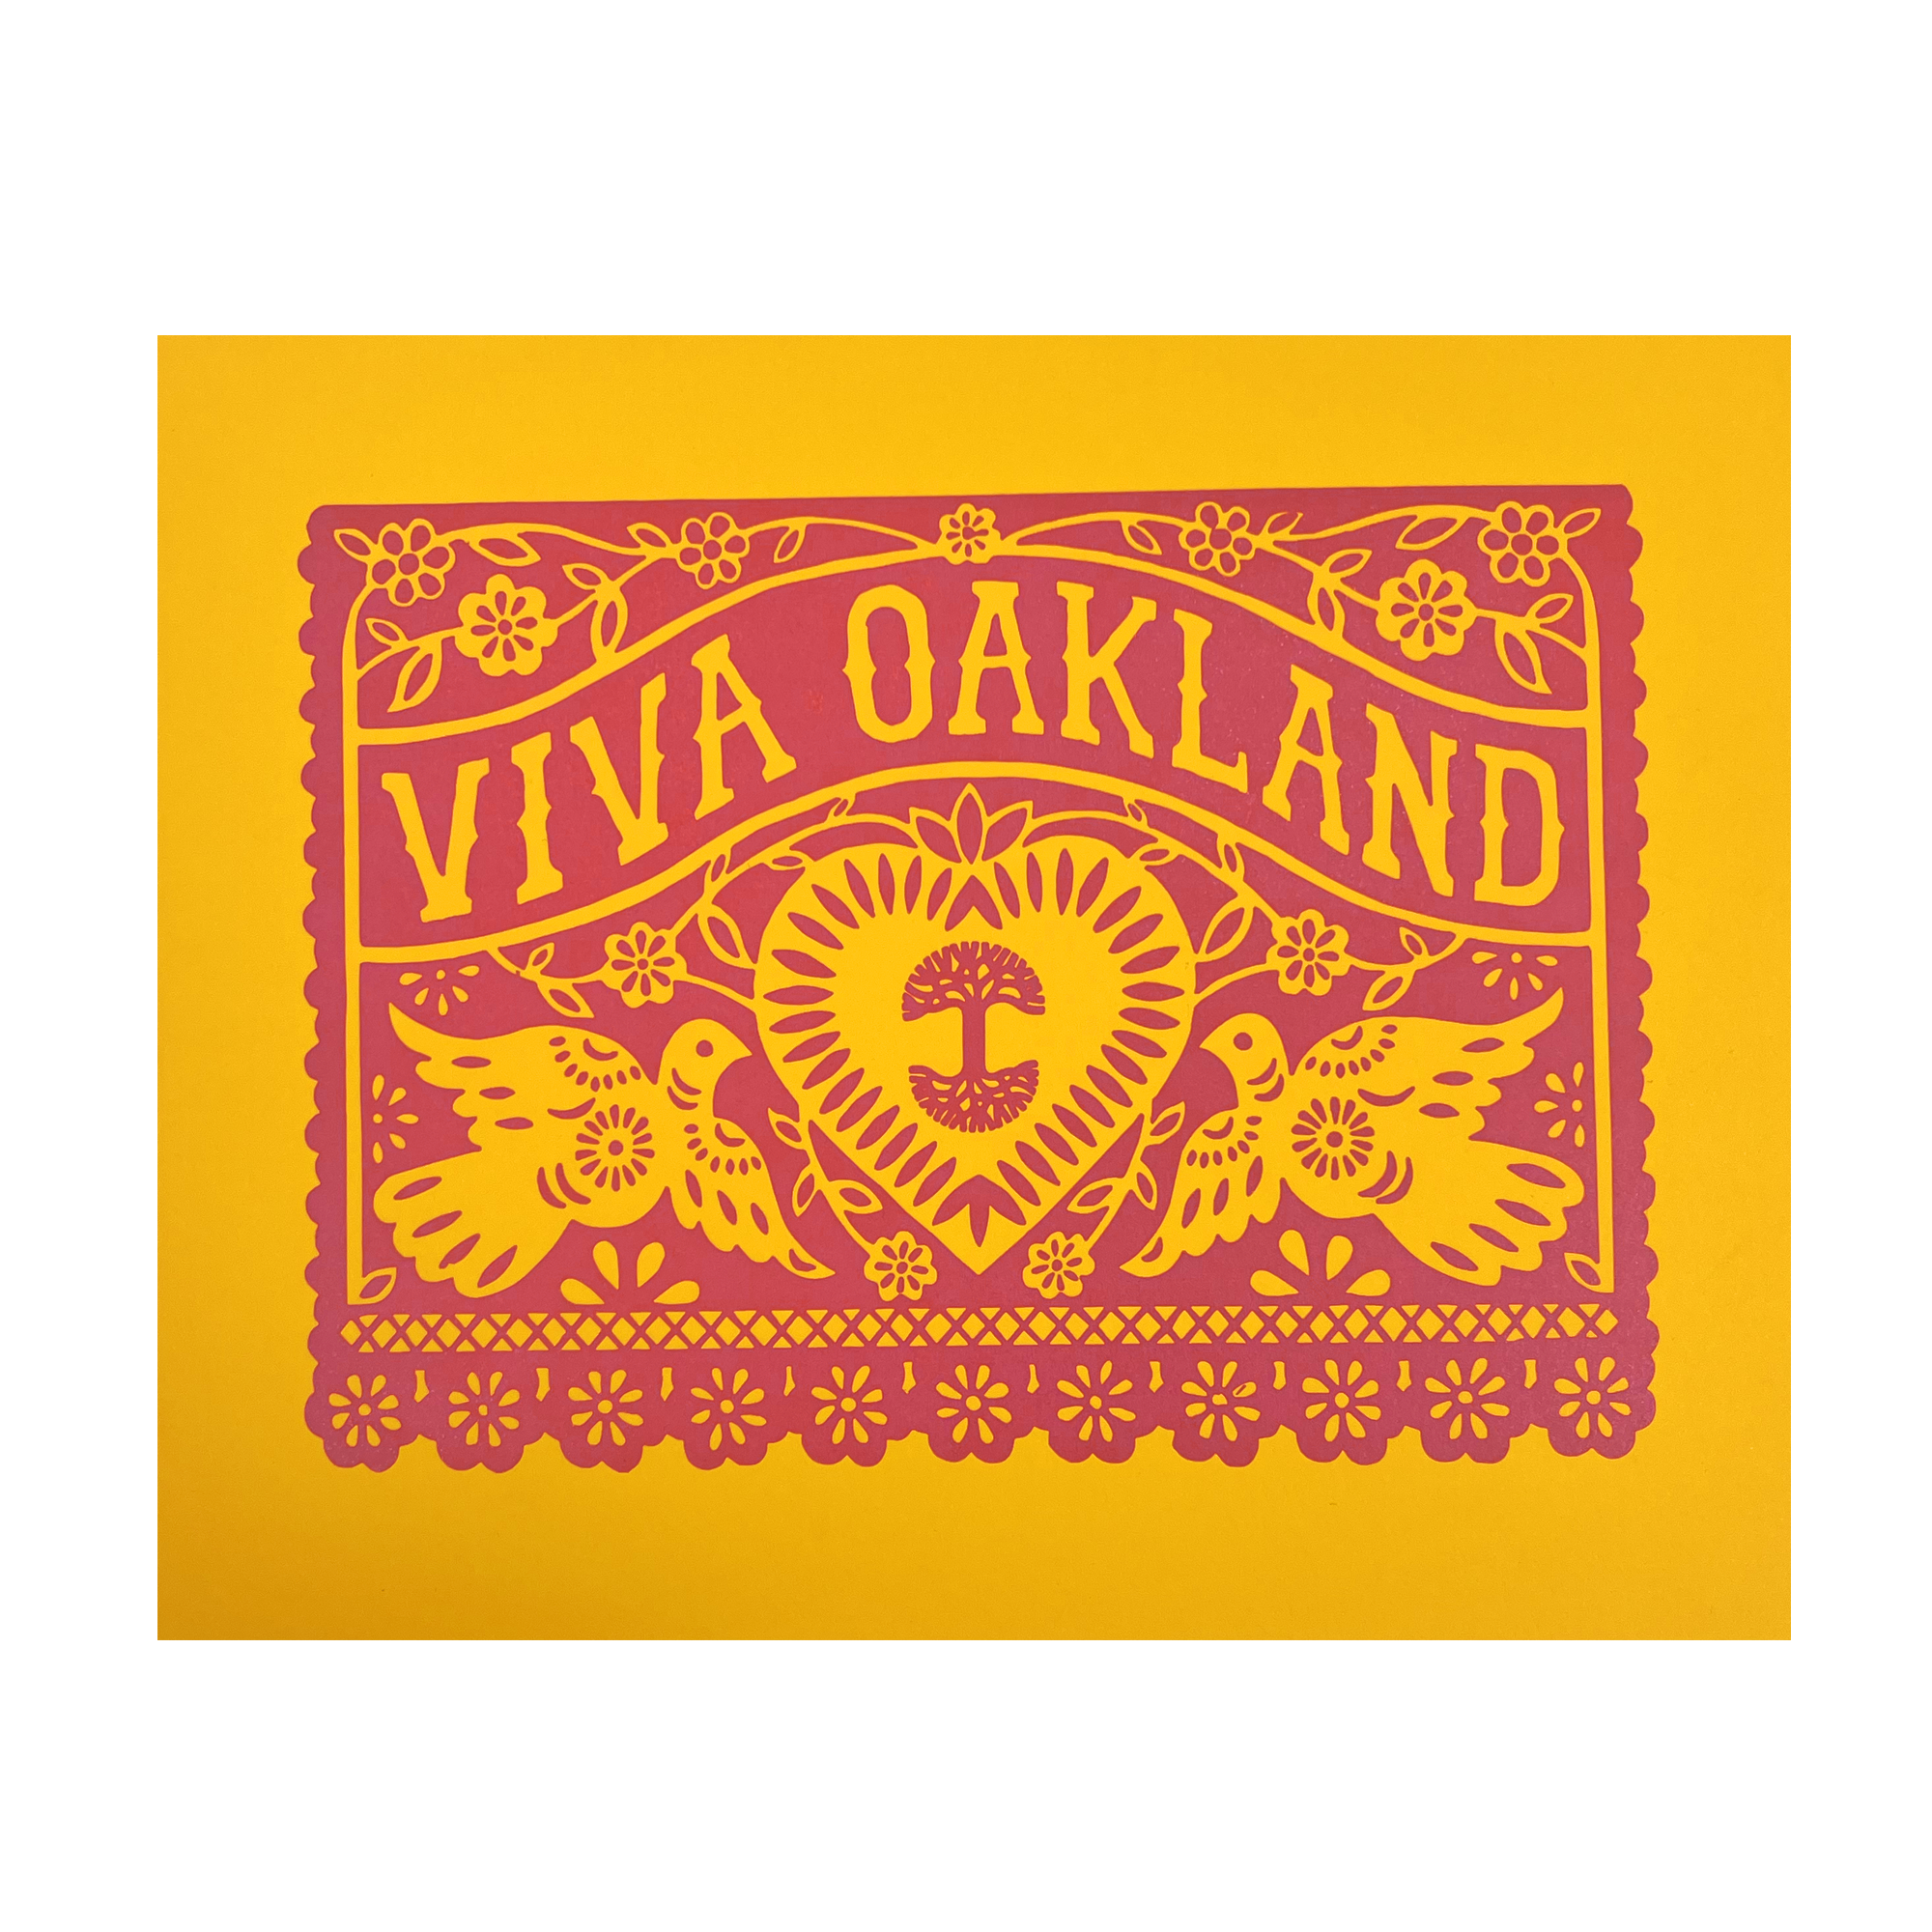 Viva Oakland Print